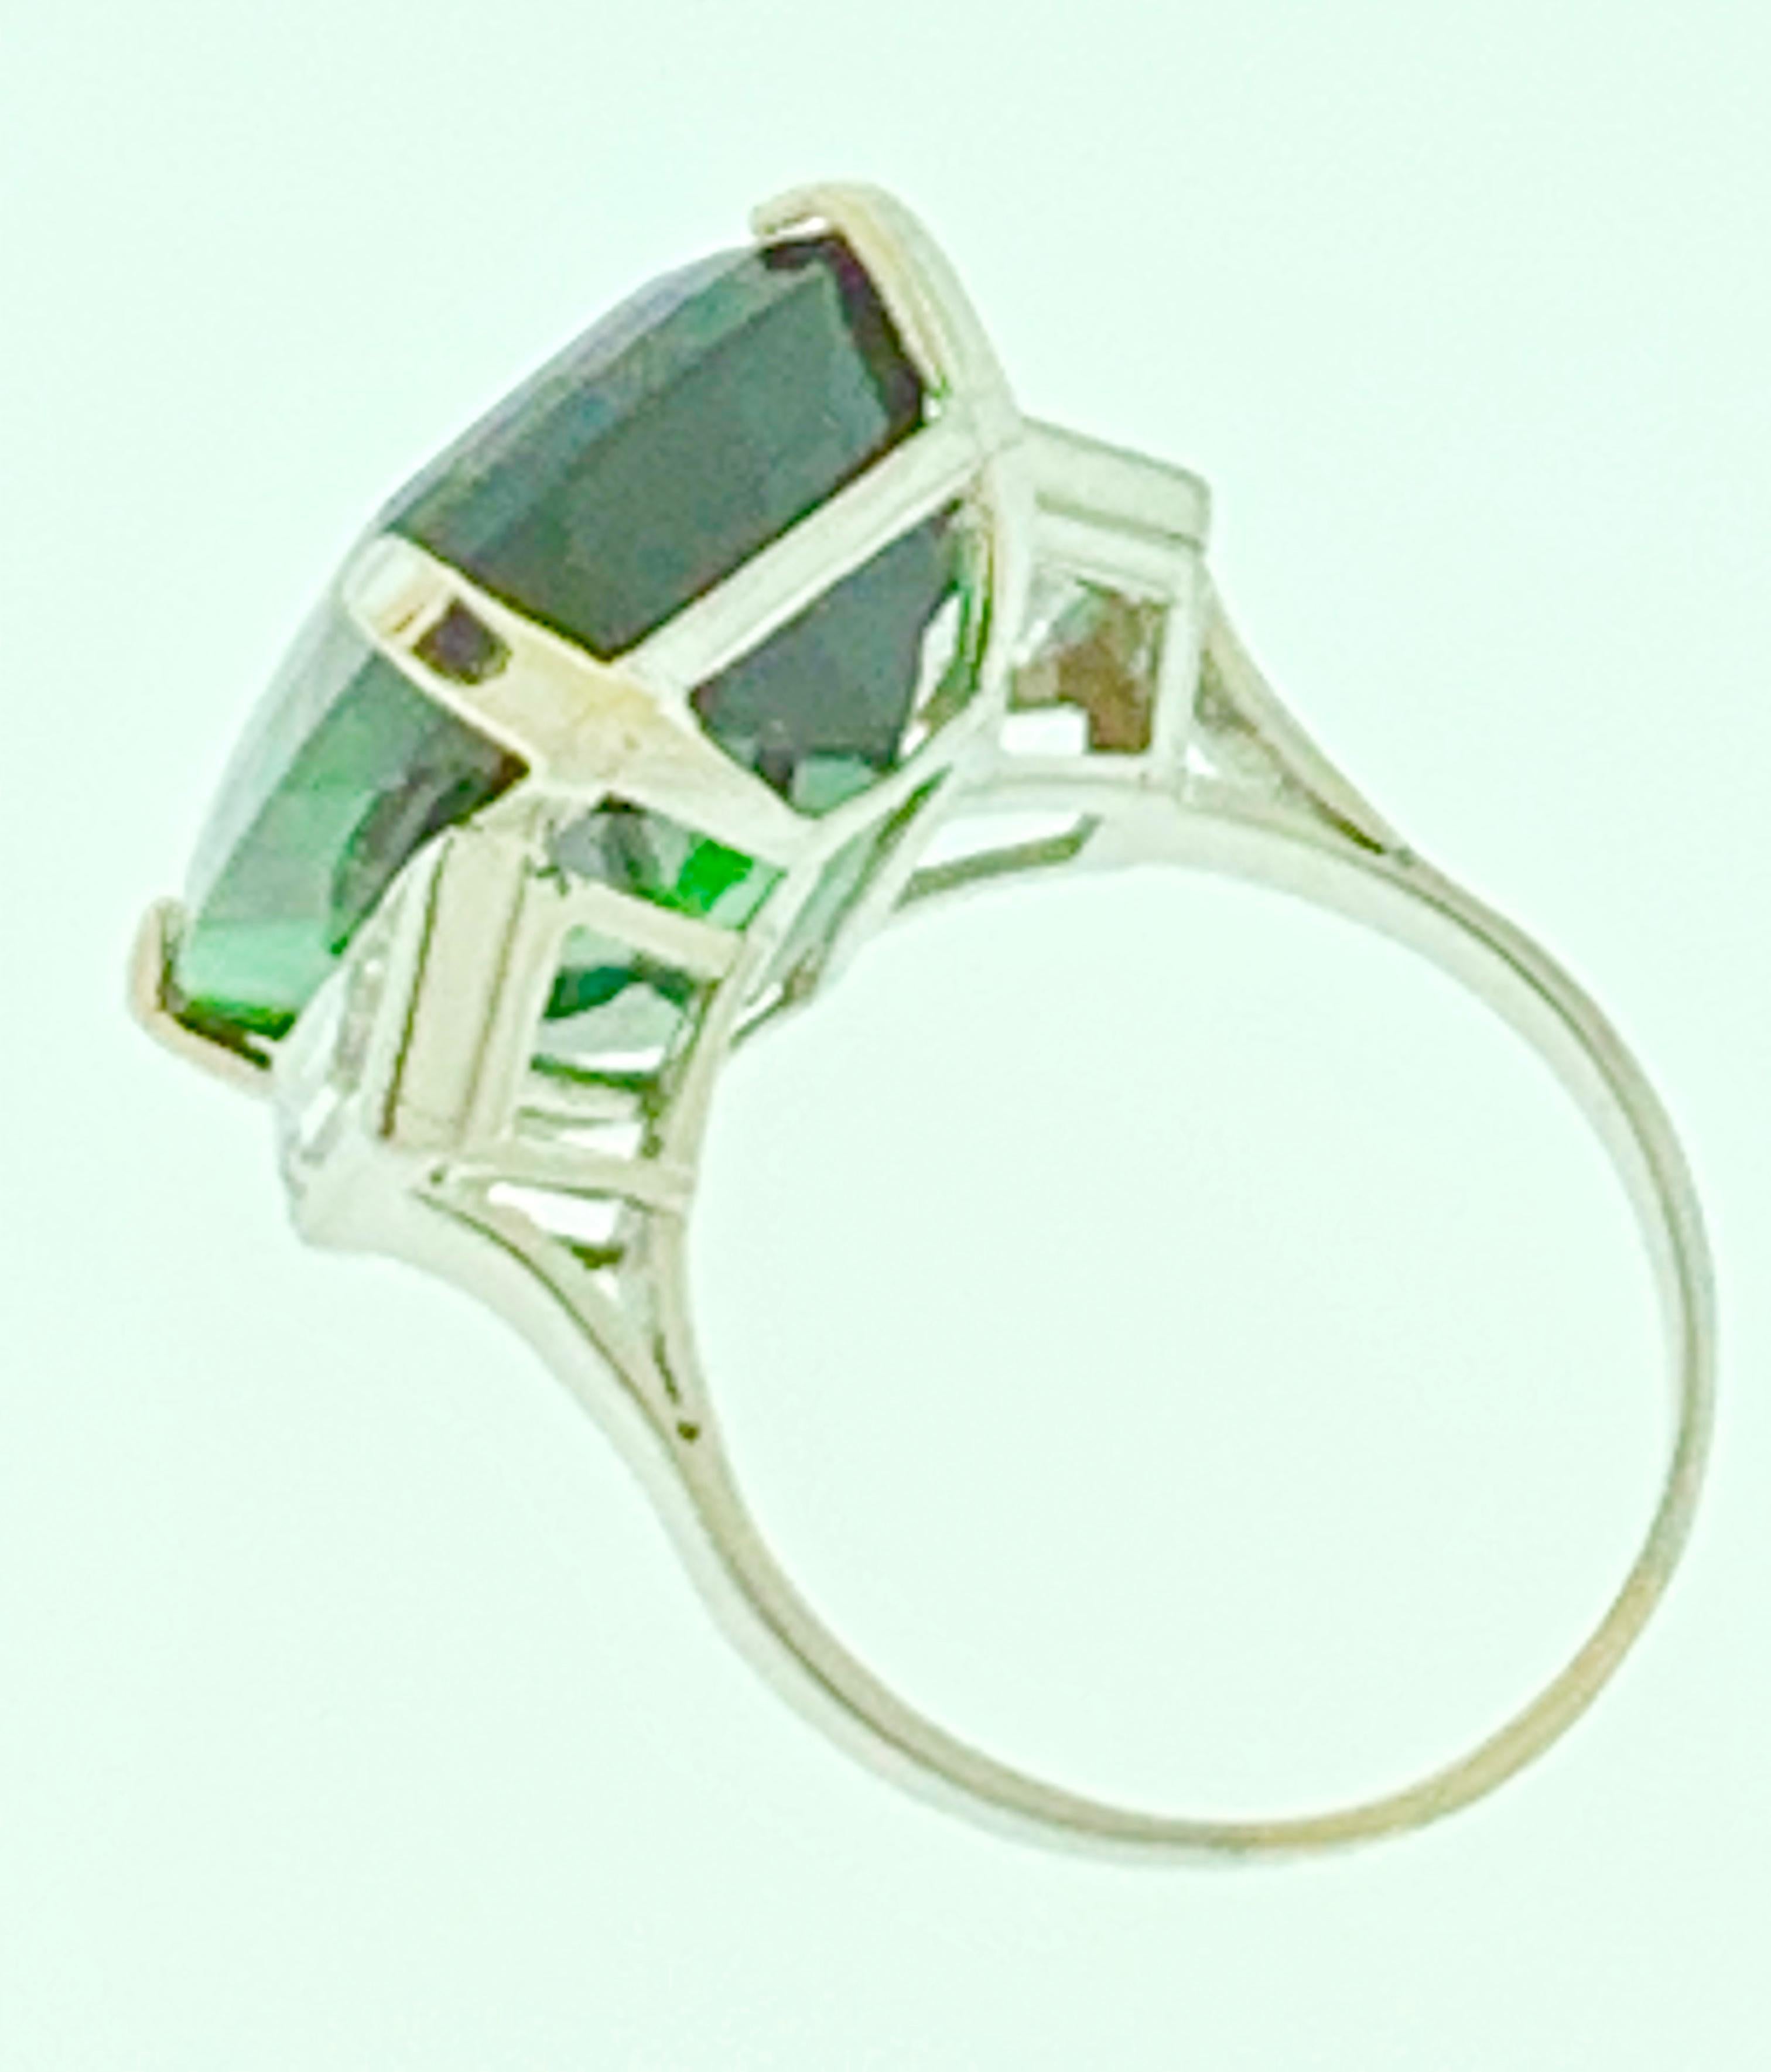 29 Carat Green Tourmaline and Solitaire Diamond Cocktail Ring Platinum Estate 2